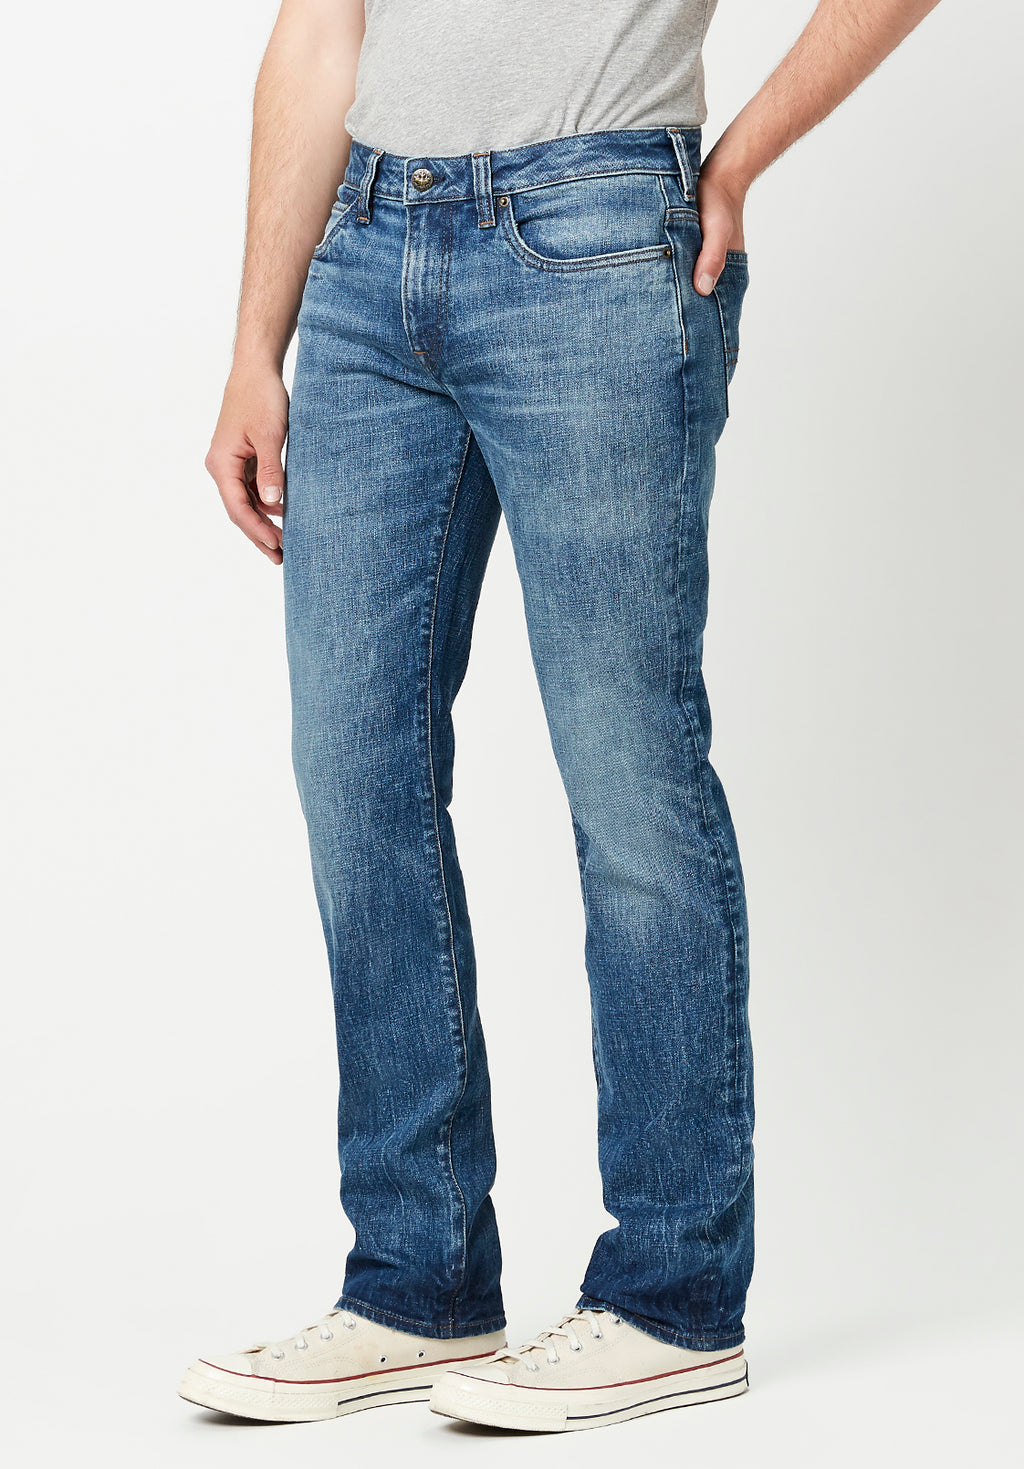 Straight Six Men's Jeans in Indigo – Buffalo Jeans - US